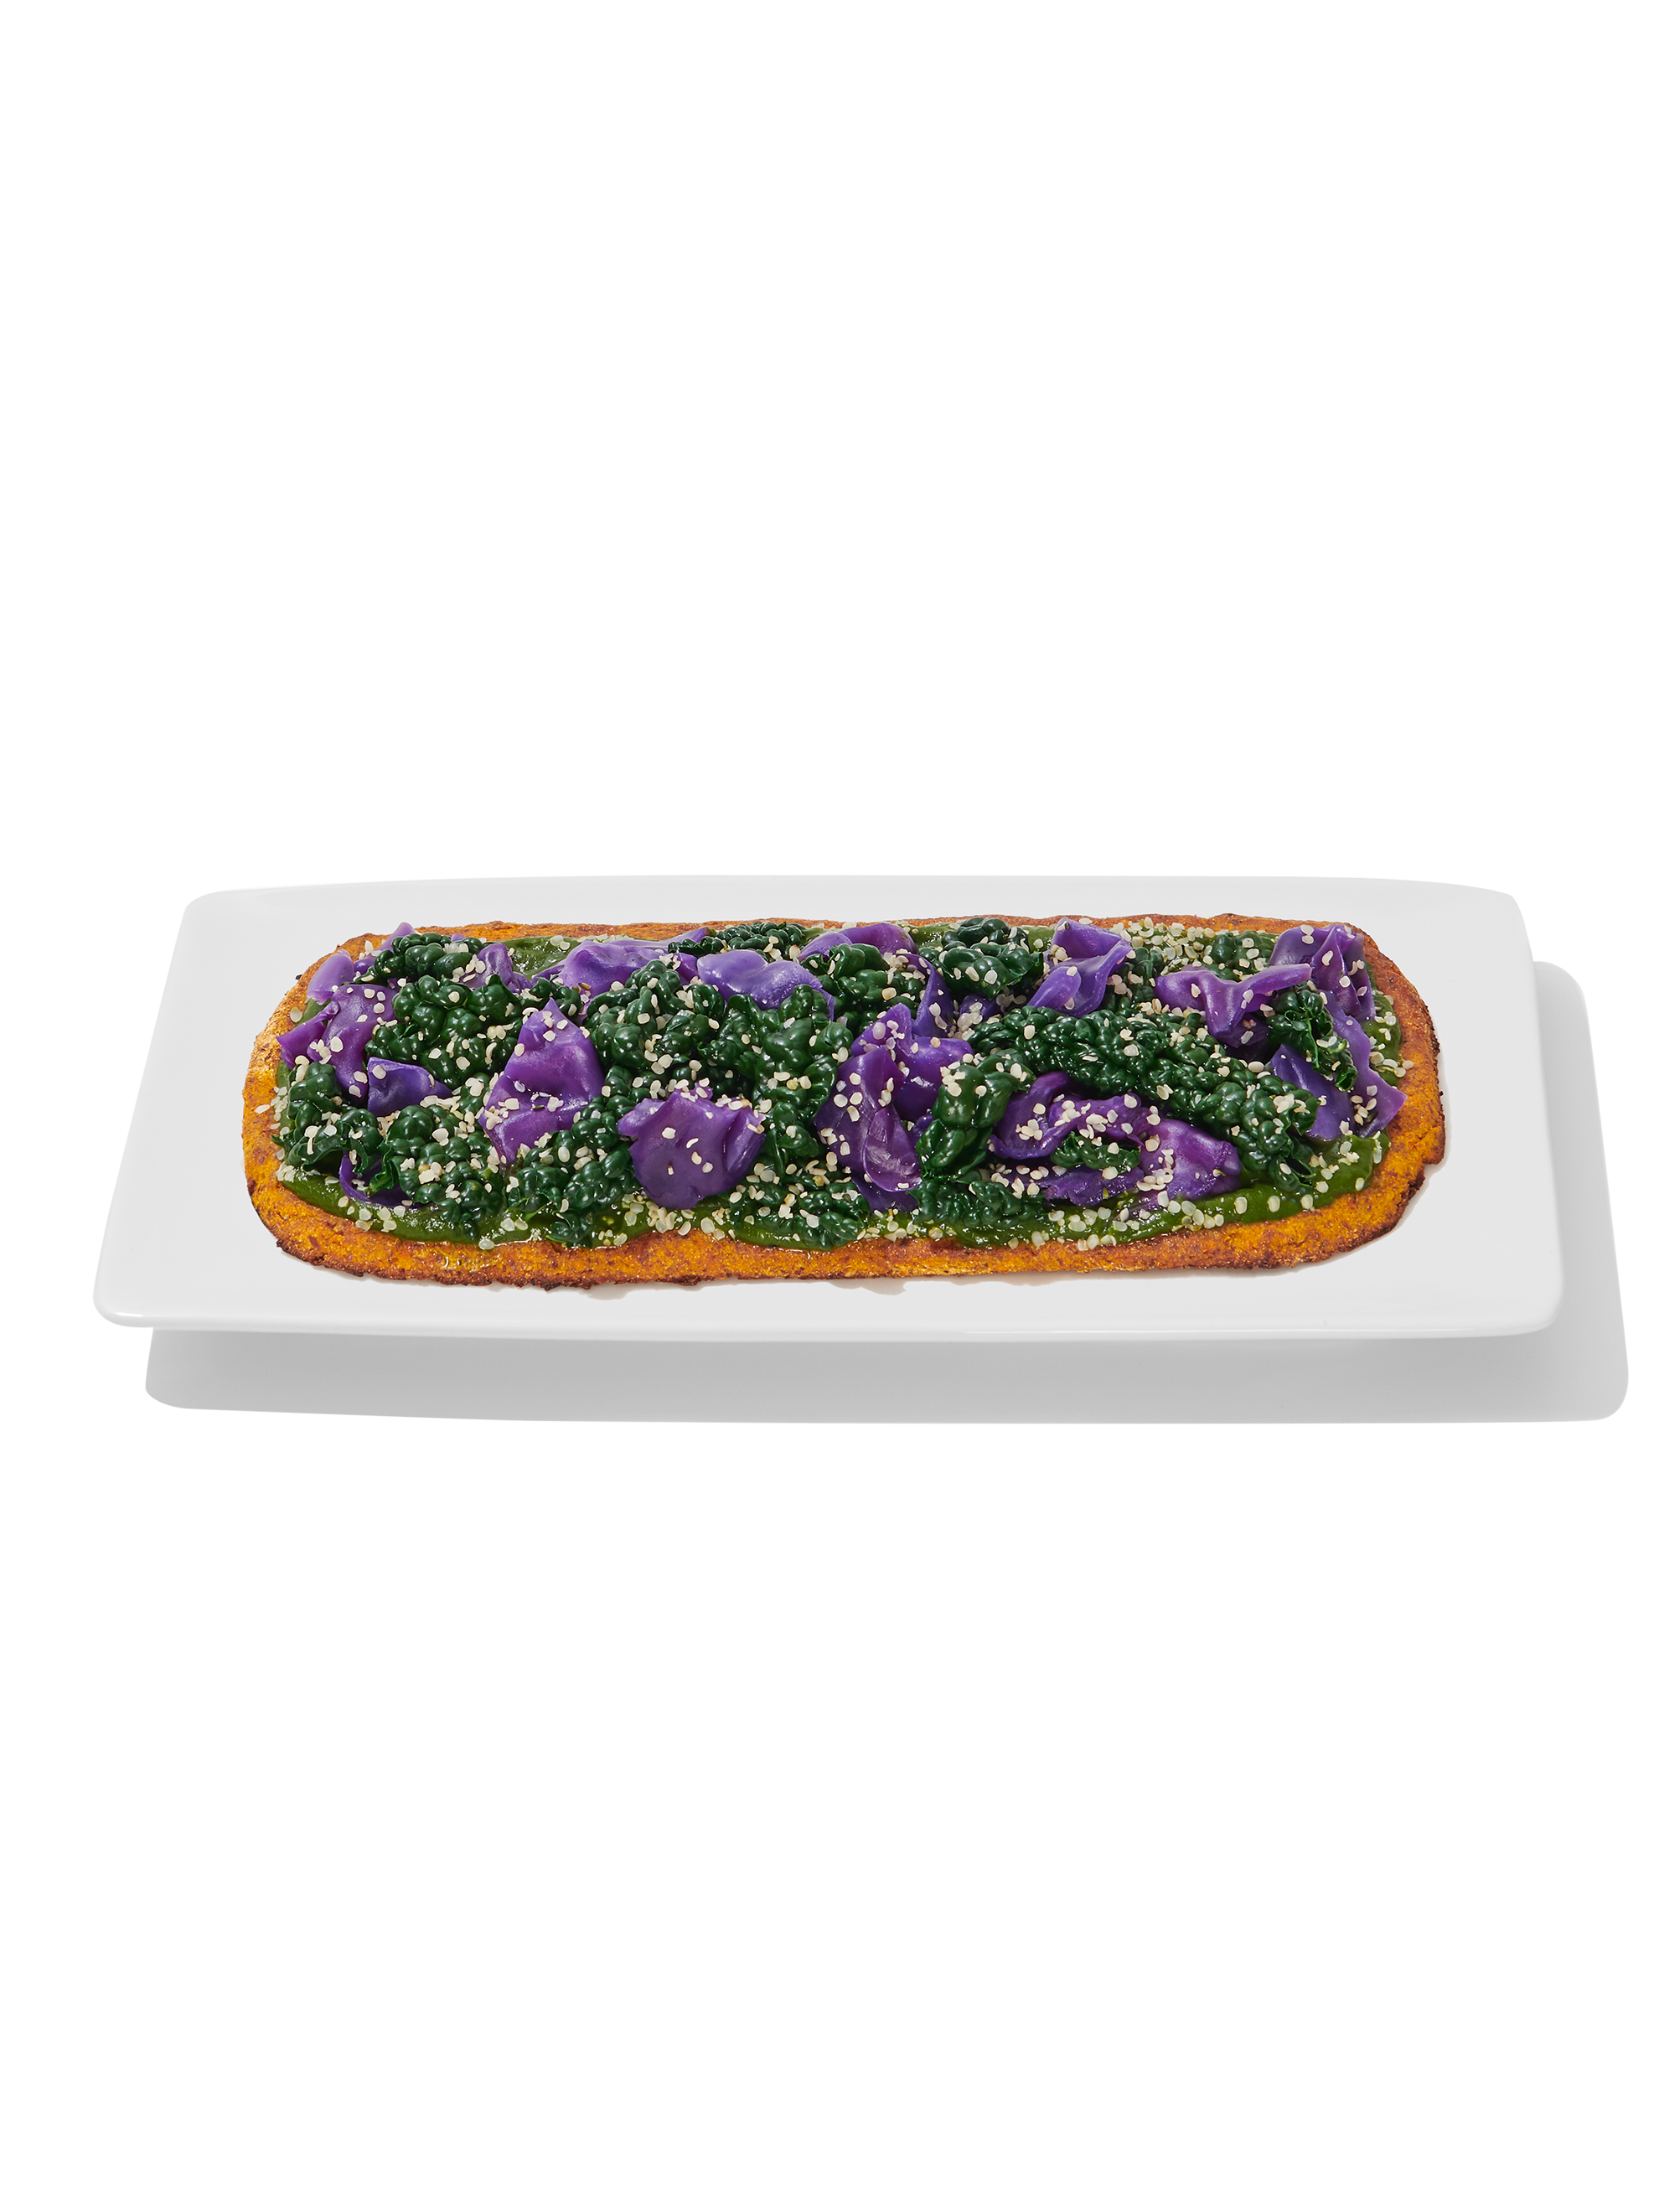 Daily Harvest Kale + Sweet Potato Flatbread